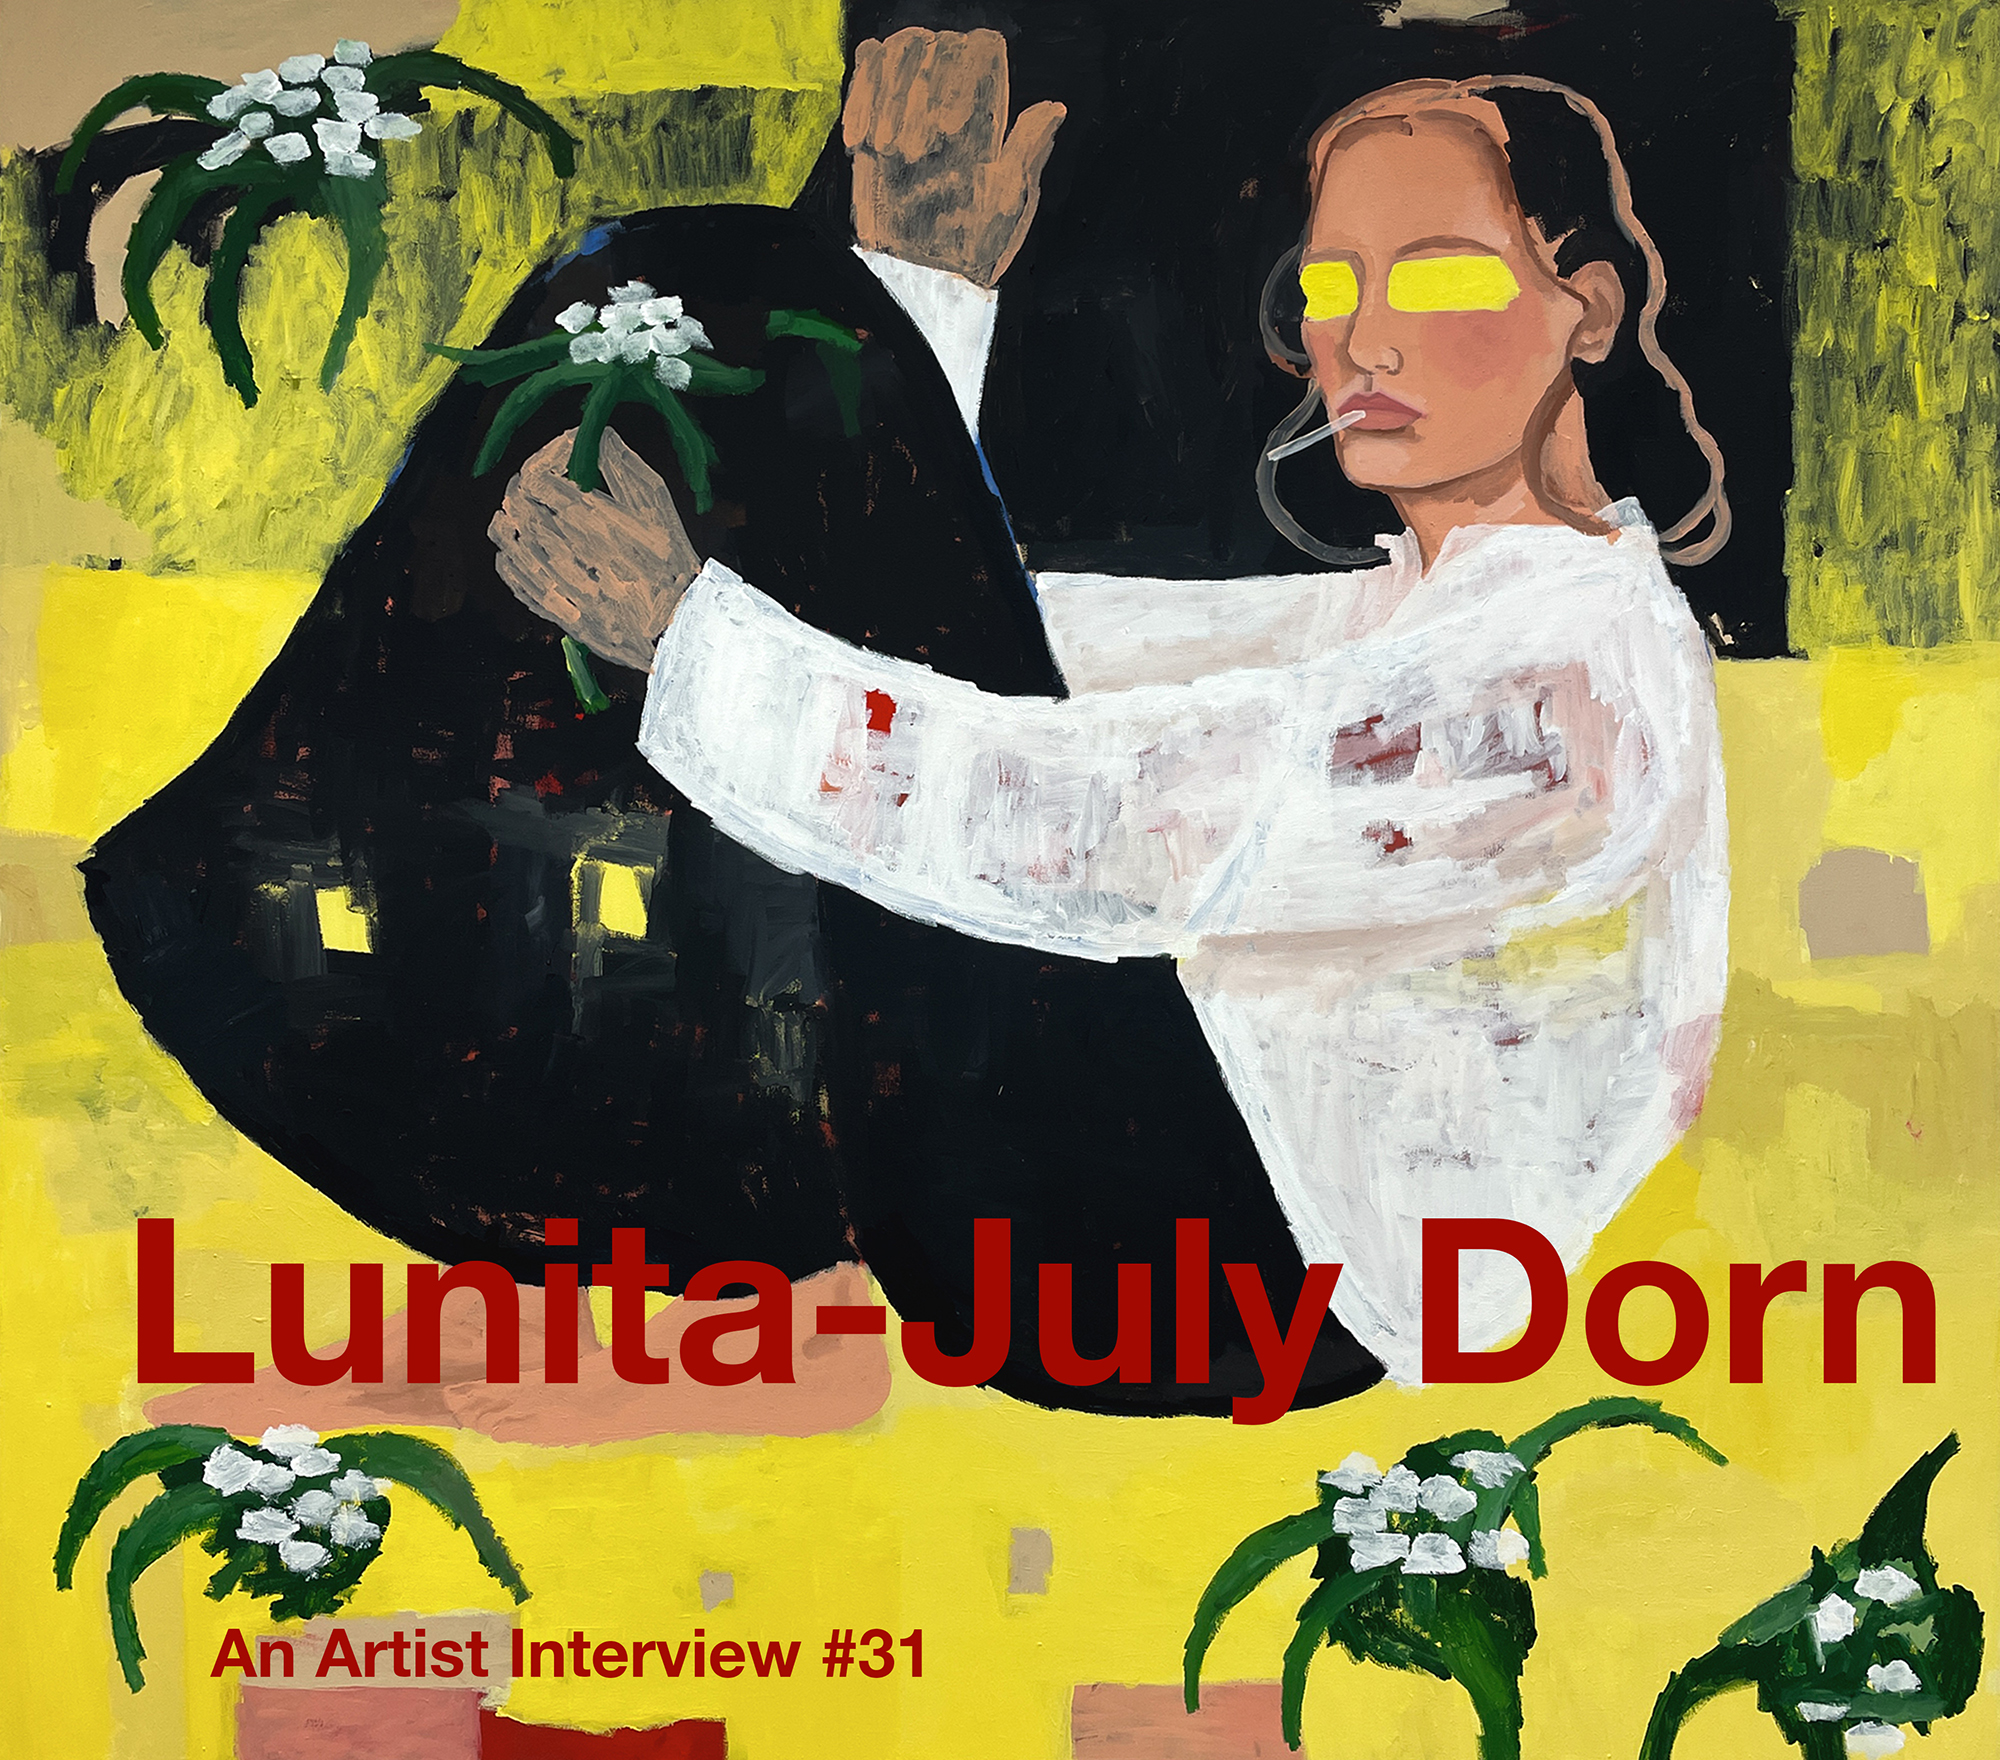 Lunita-July Dorn  front